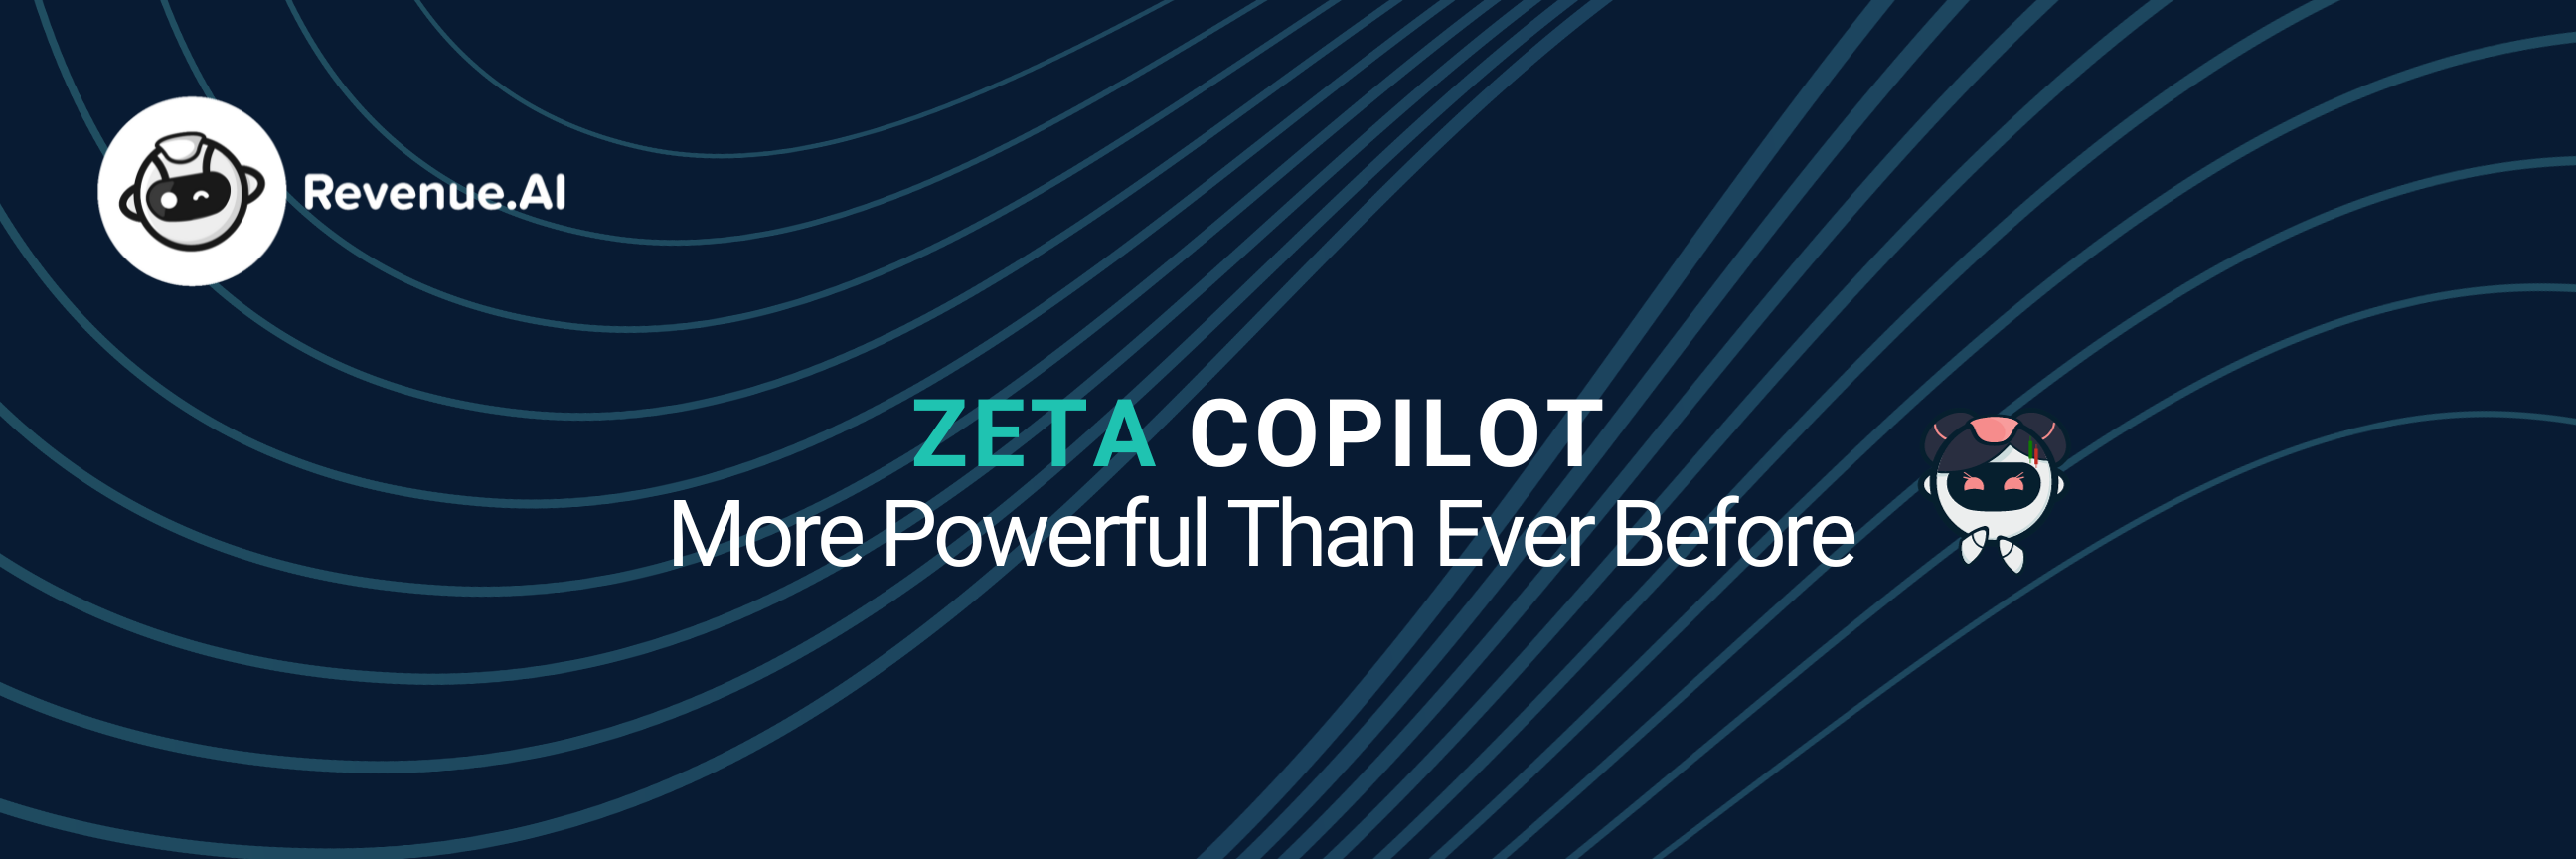 Zeta Copilot for Commodity Trading